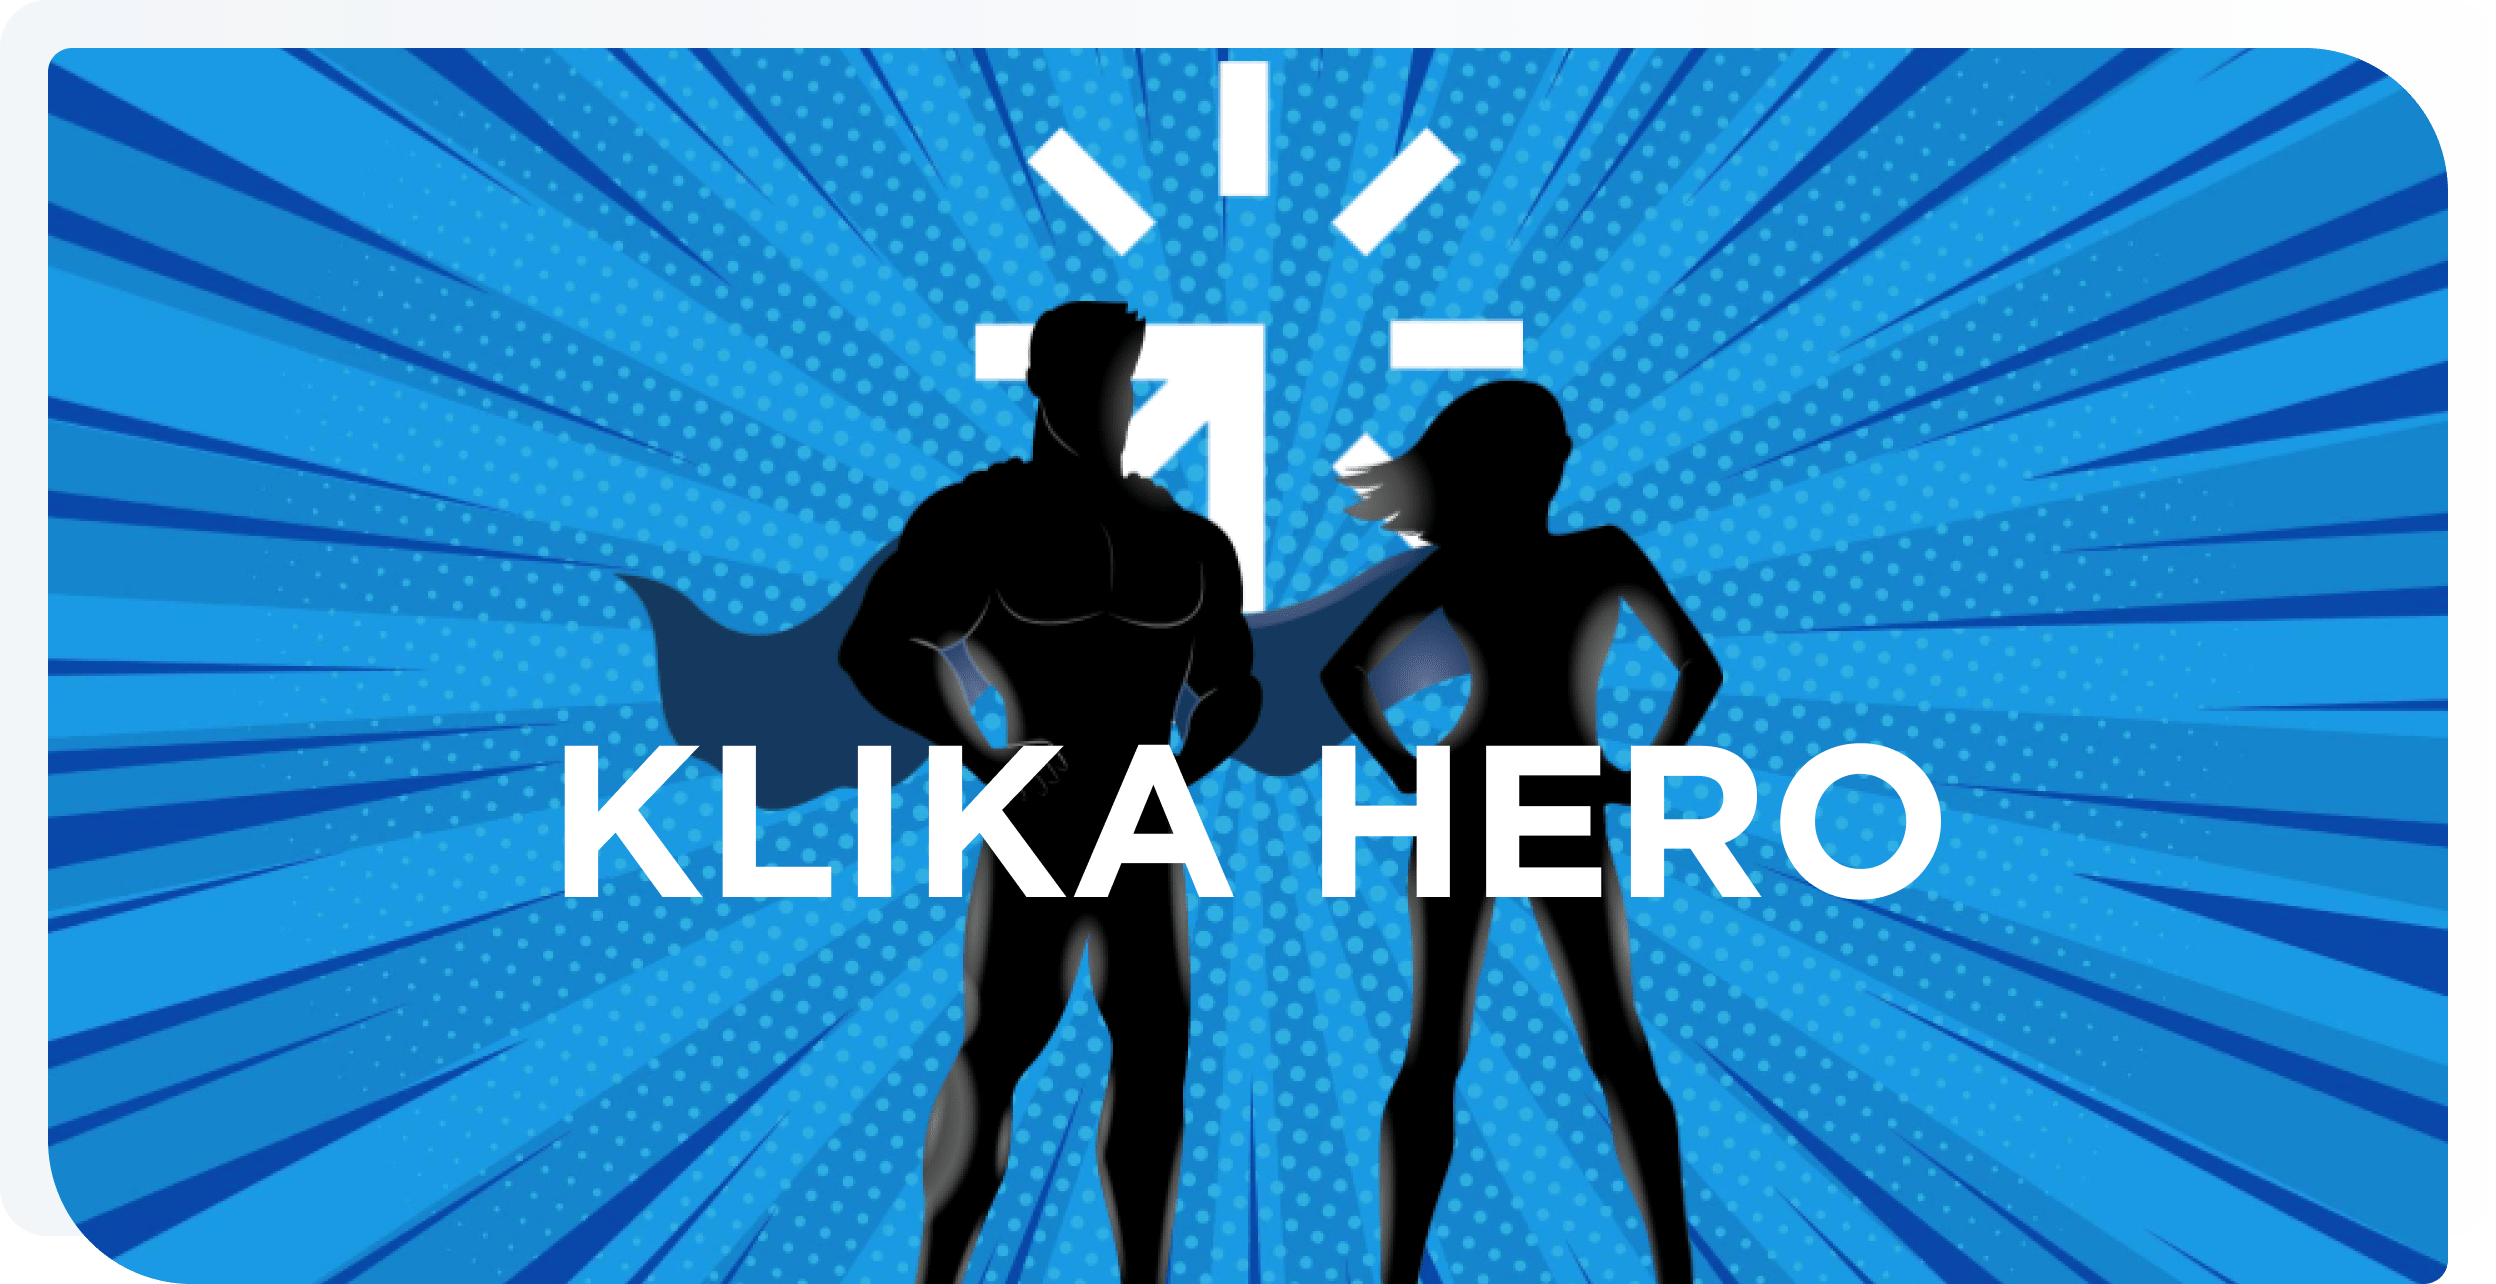 The Klika Hero Program